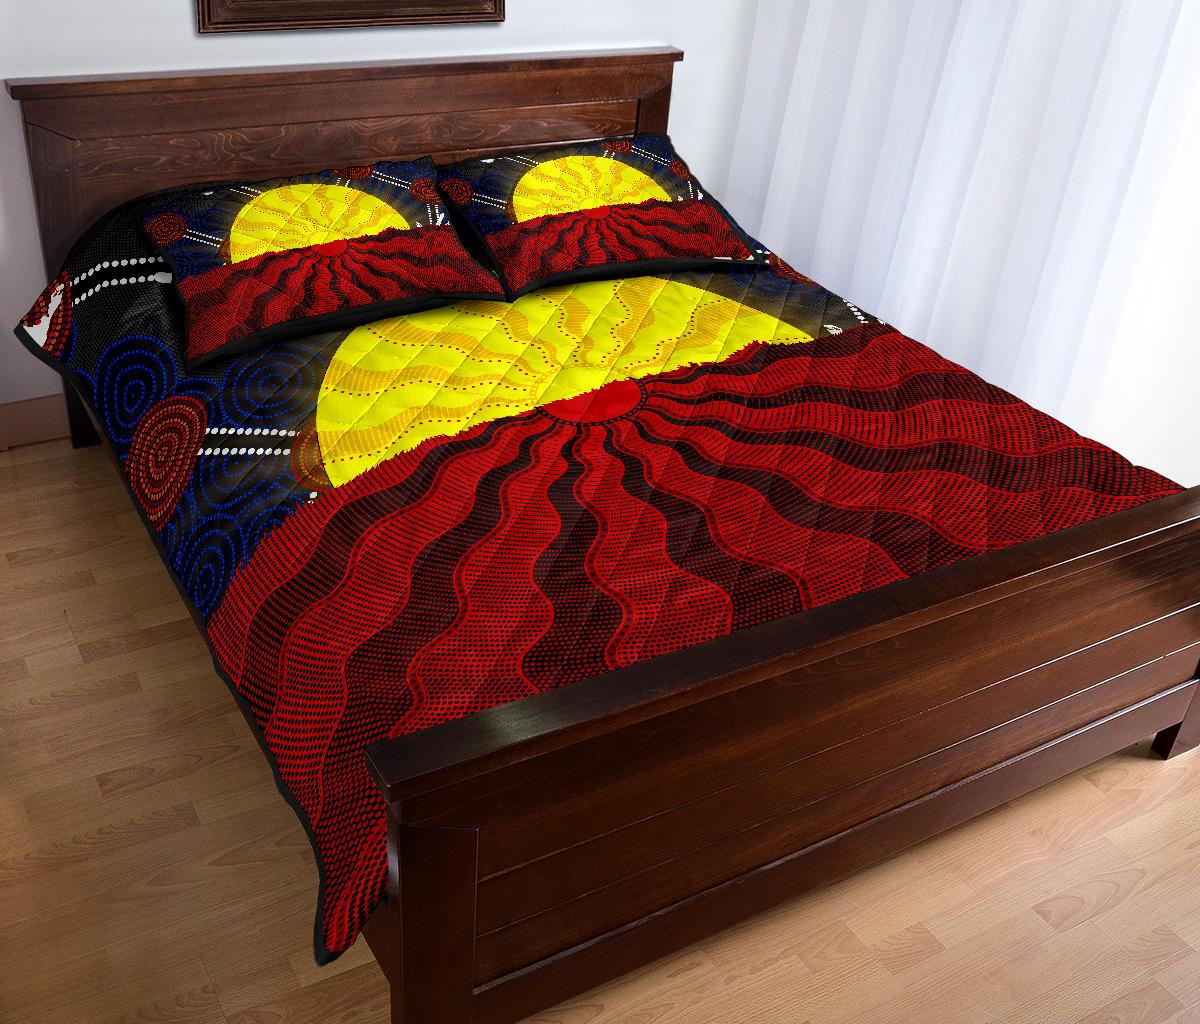 aboriginal-quilt-bed-set-aboriginal-lives-matter-flag-sun-dot-painting